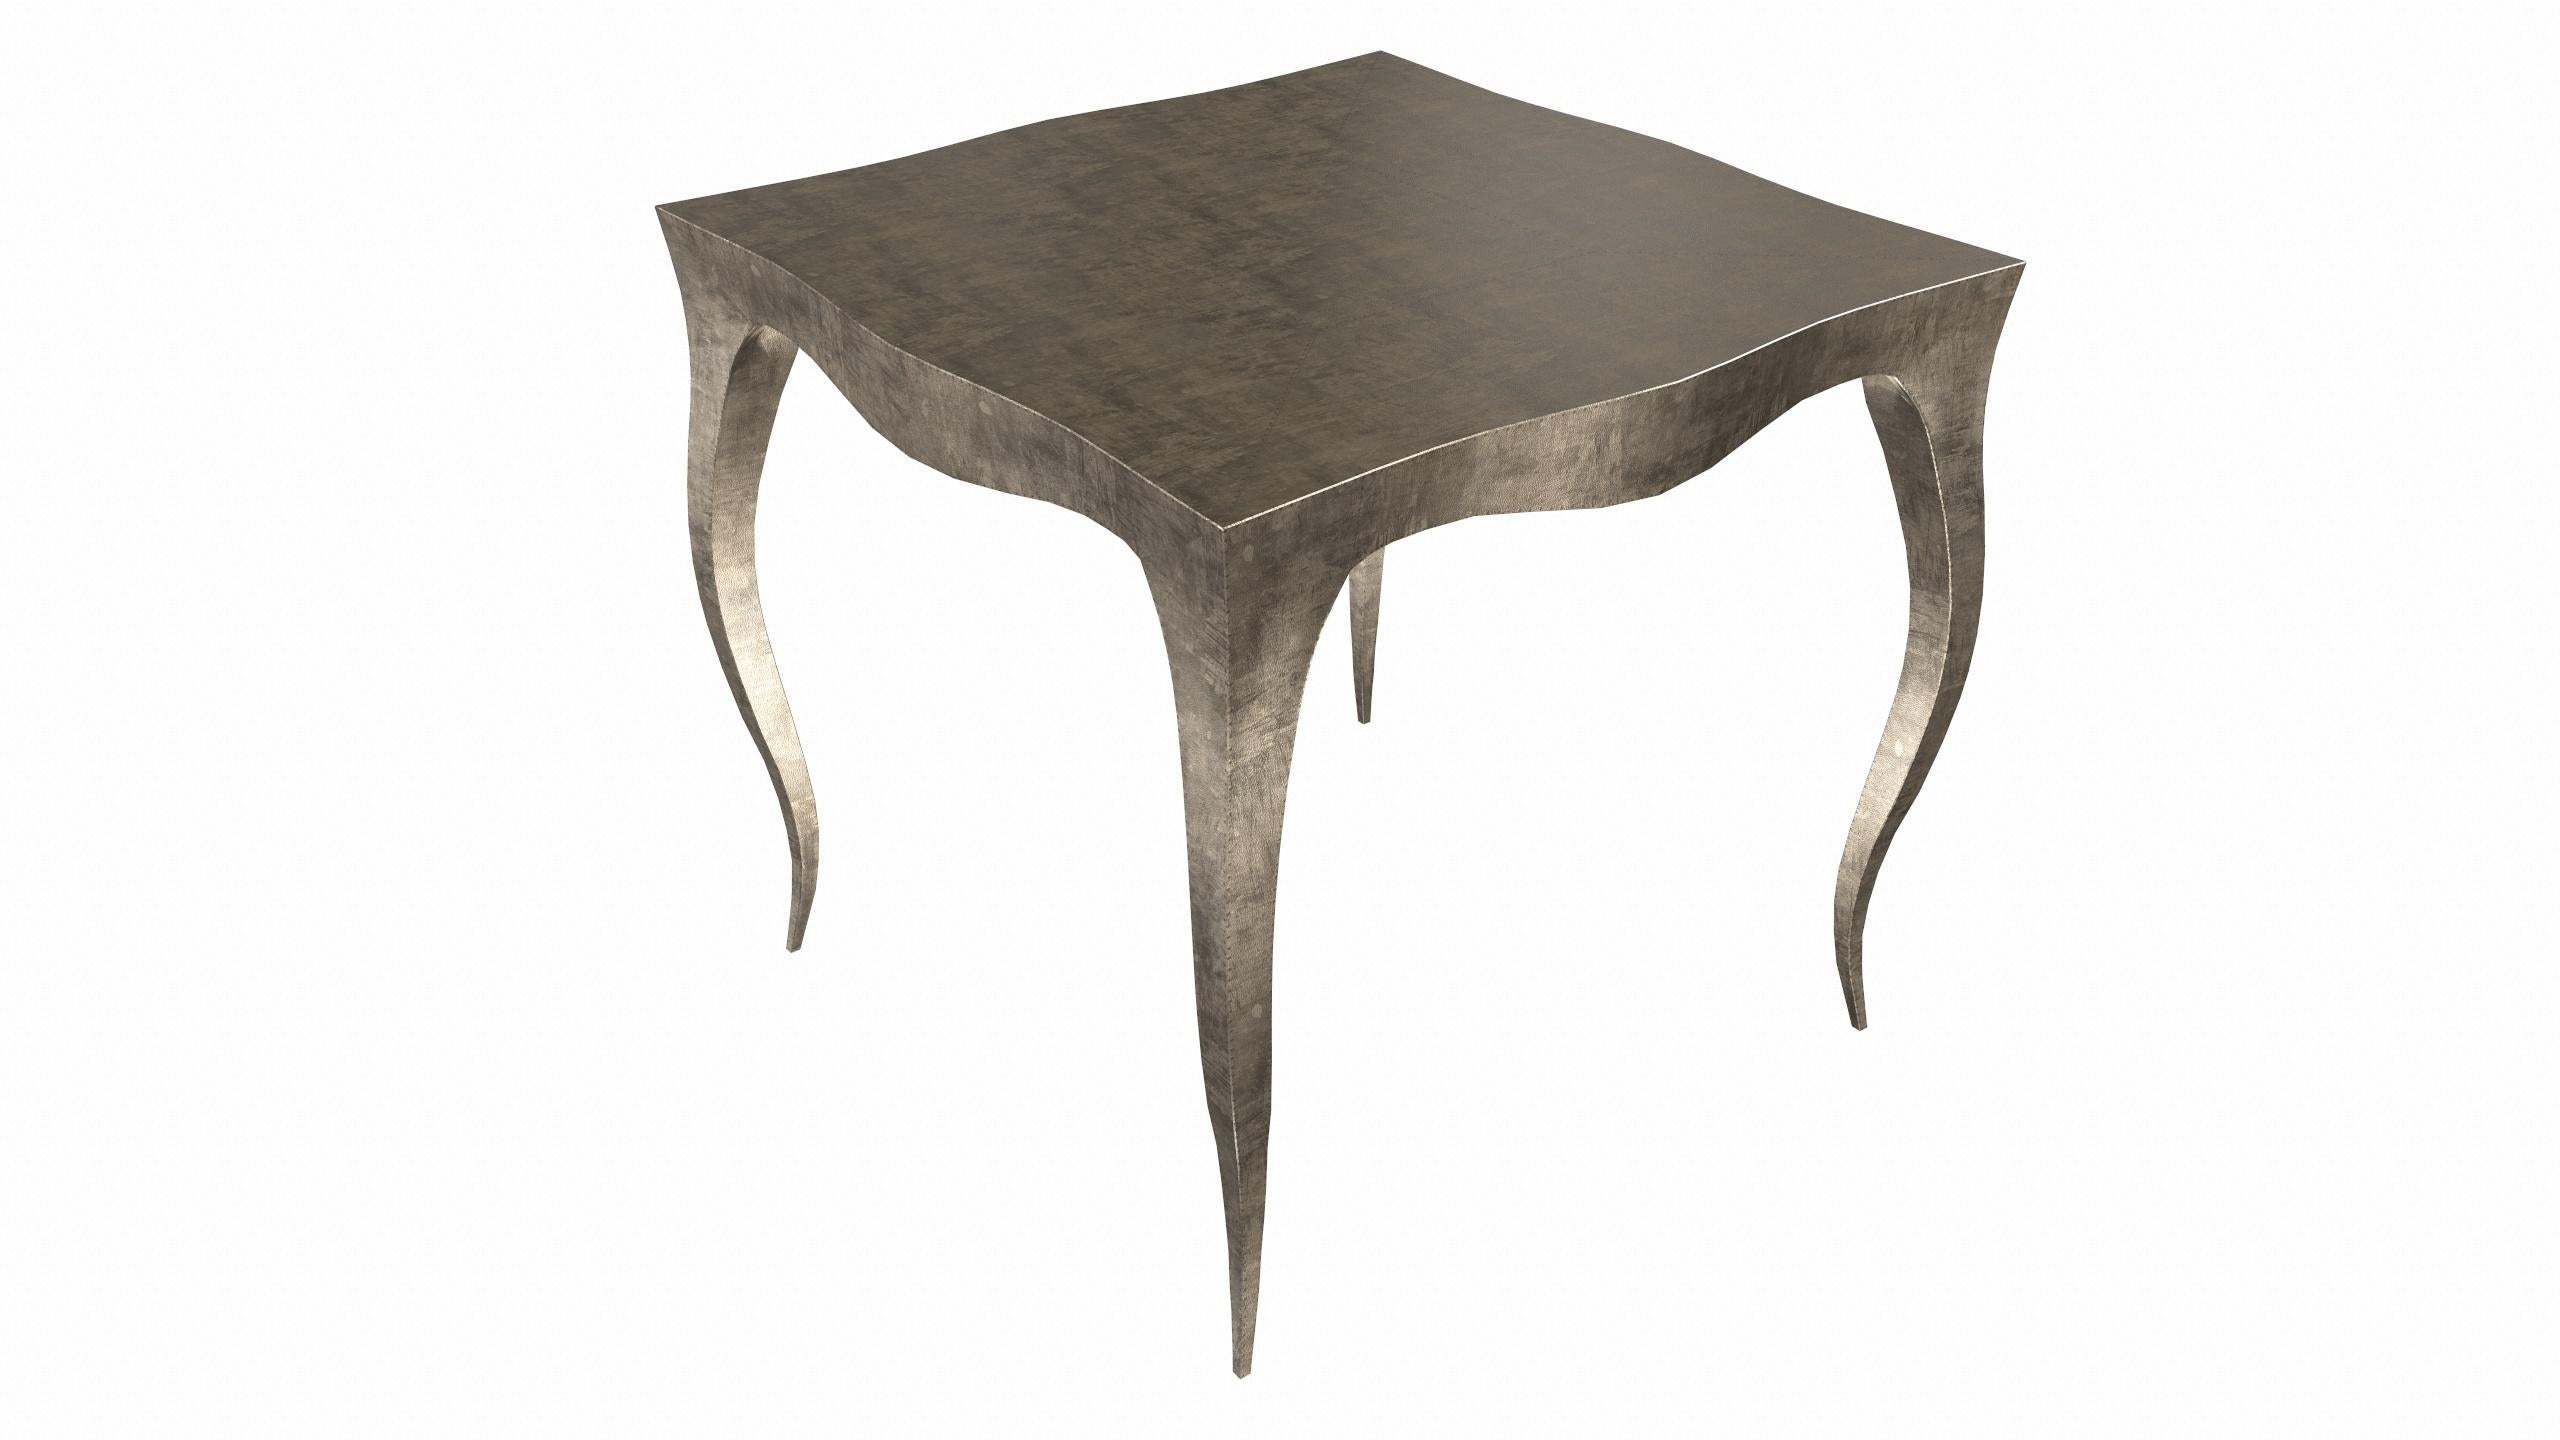 Metal Louise Art Nouveau Tray Tables Fine Hammered Antique Bronze by Paul Mathieu For Sale